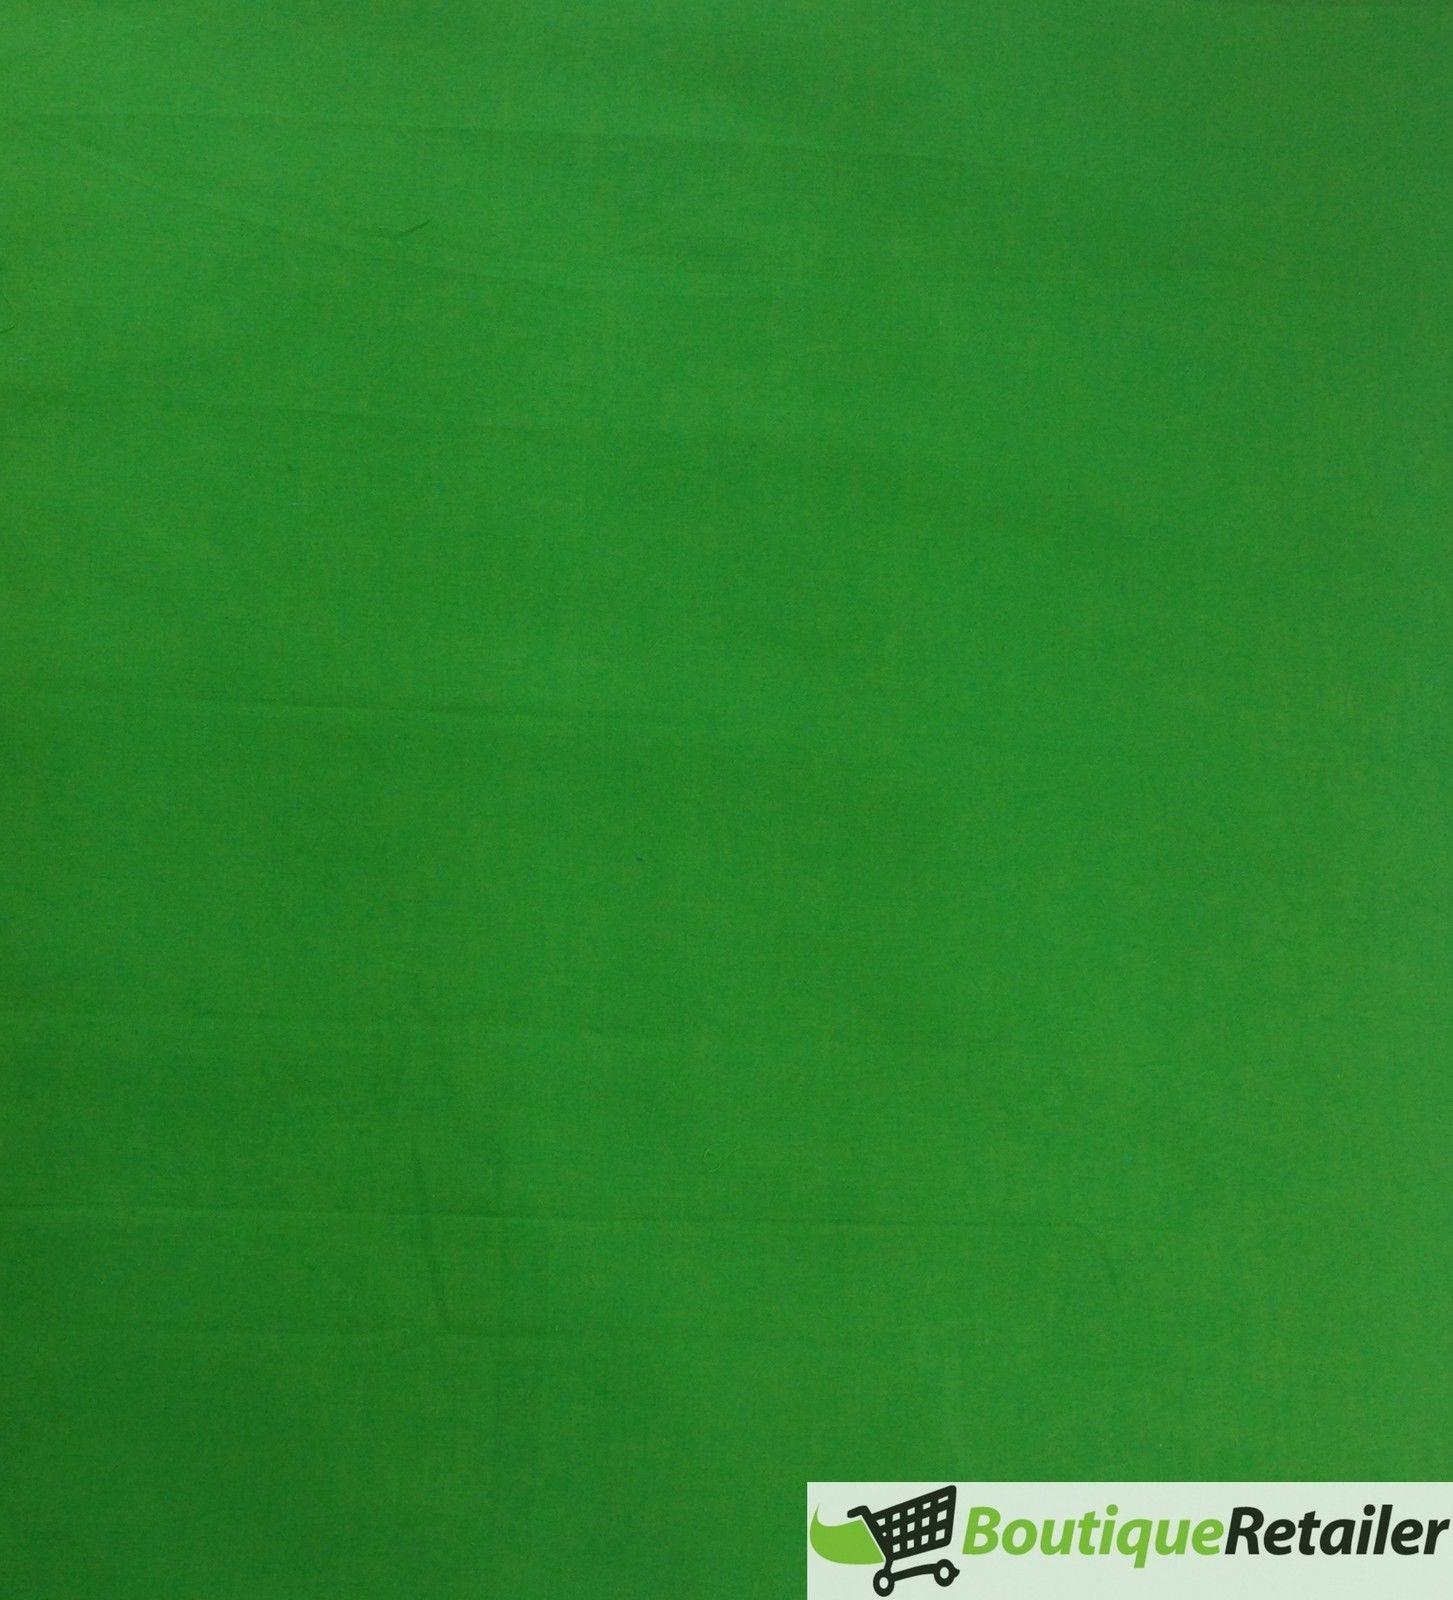 15x BULK BANDANA Paisley 100% COTTON Head Wrap Bandanna Head Wrap Summer Scarf - Green (Plain)